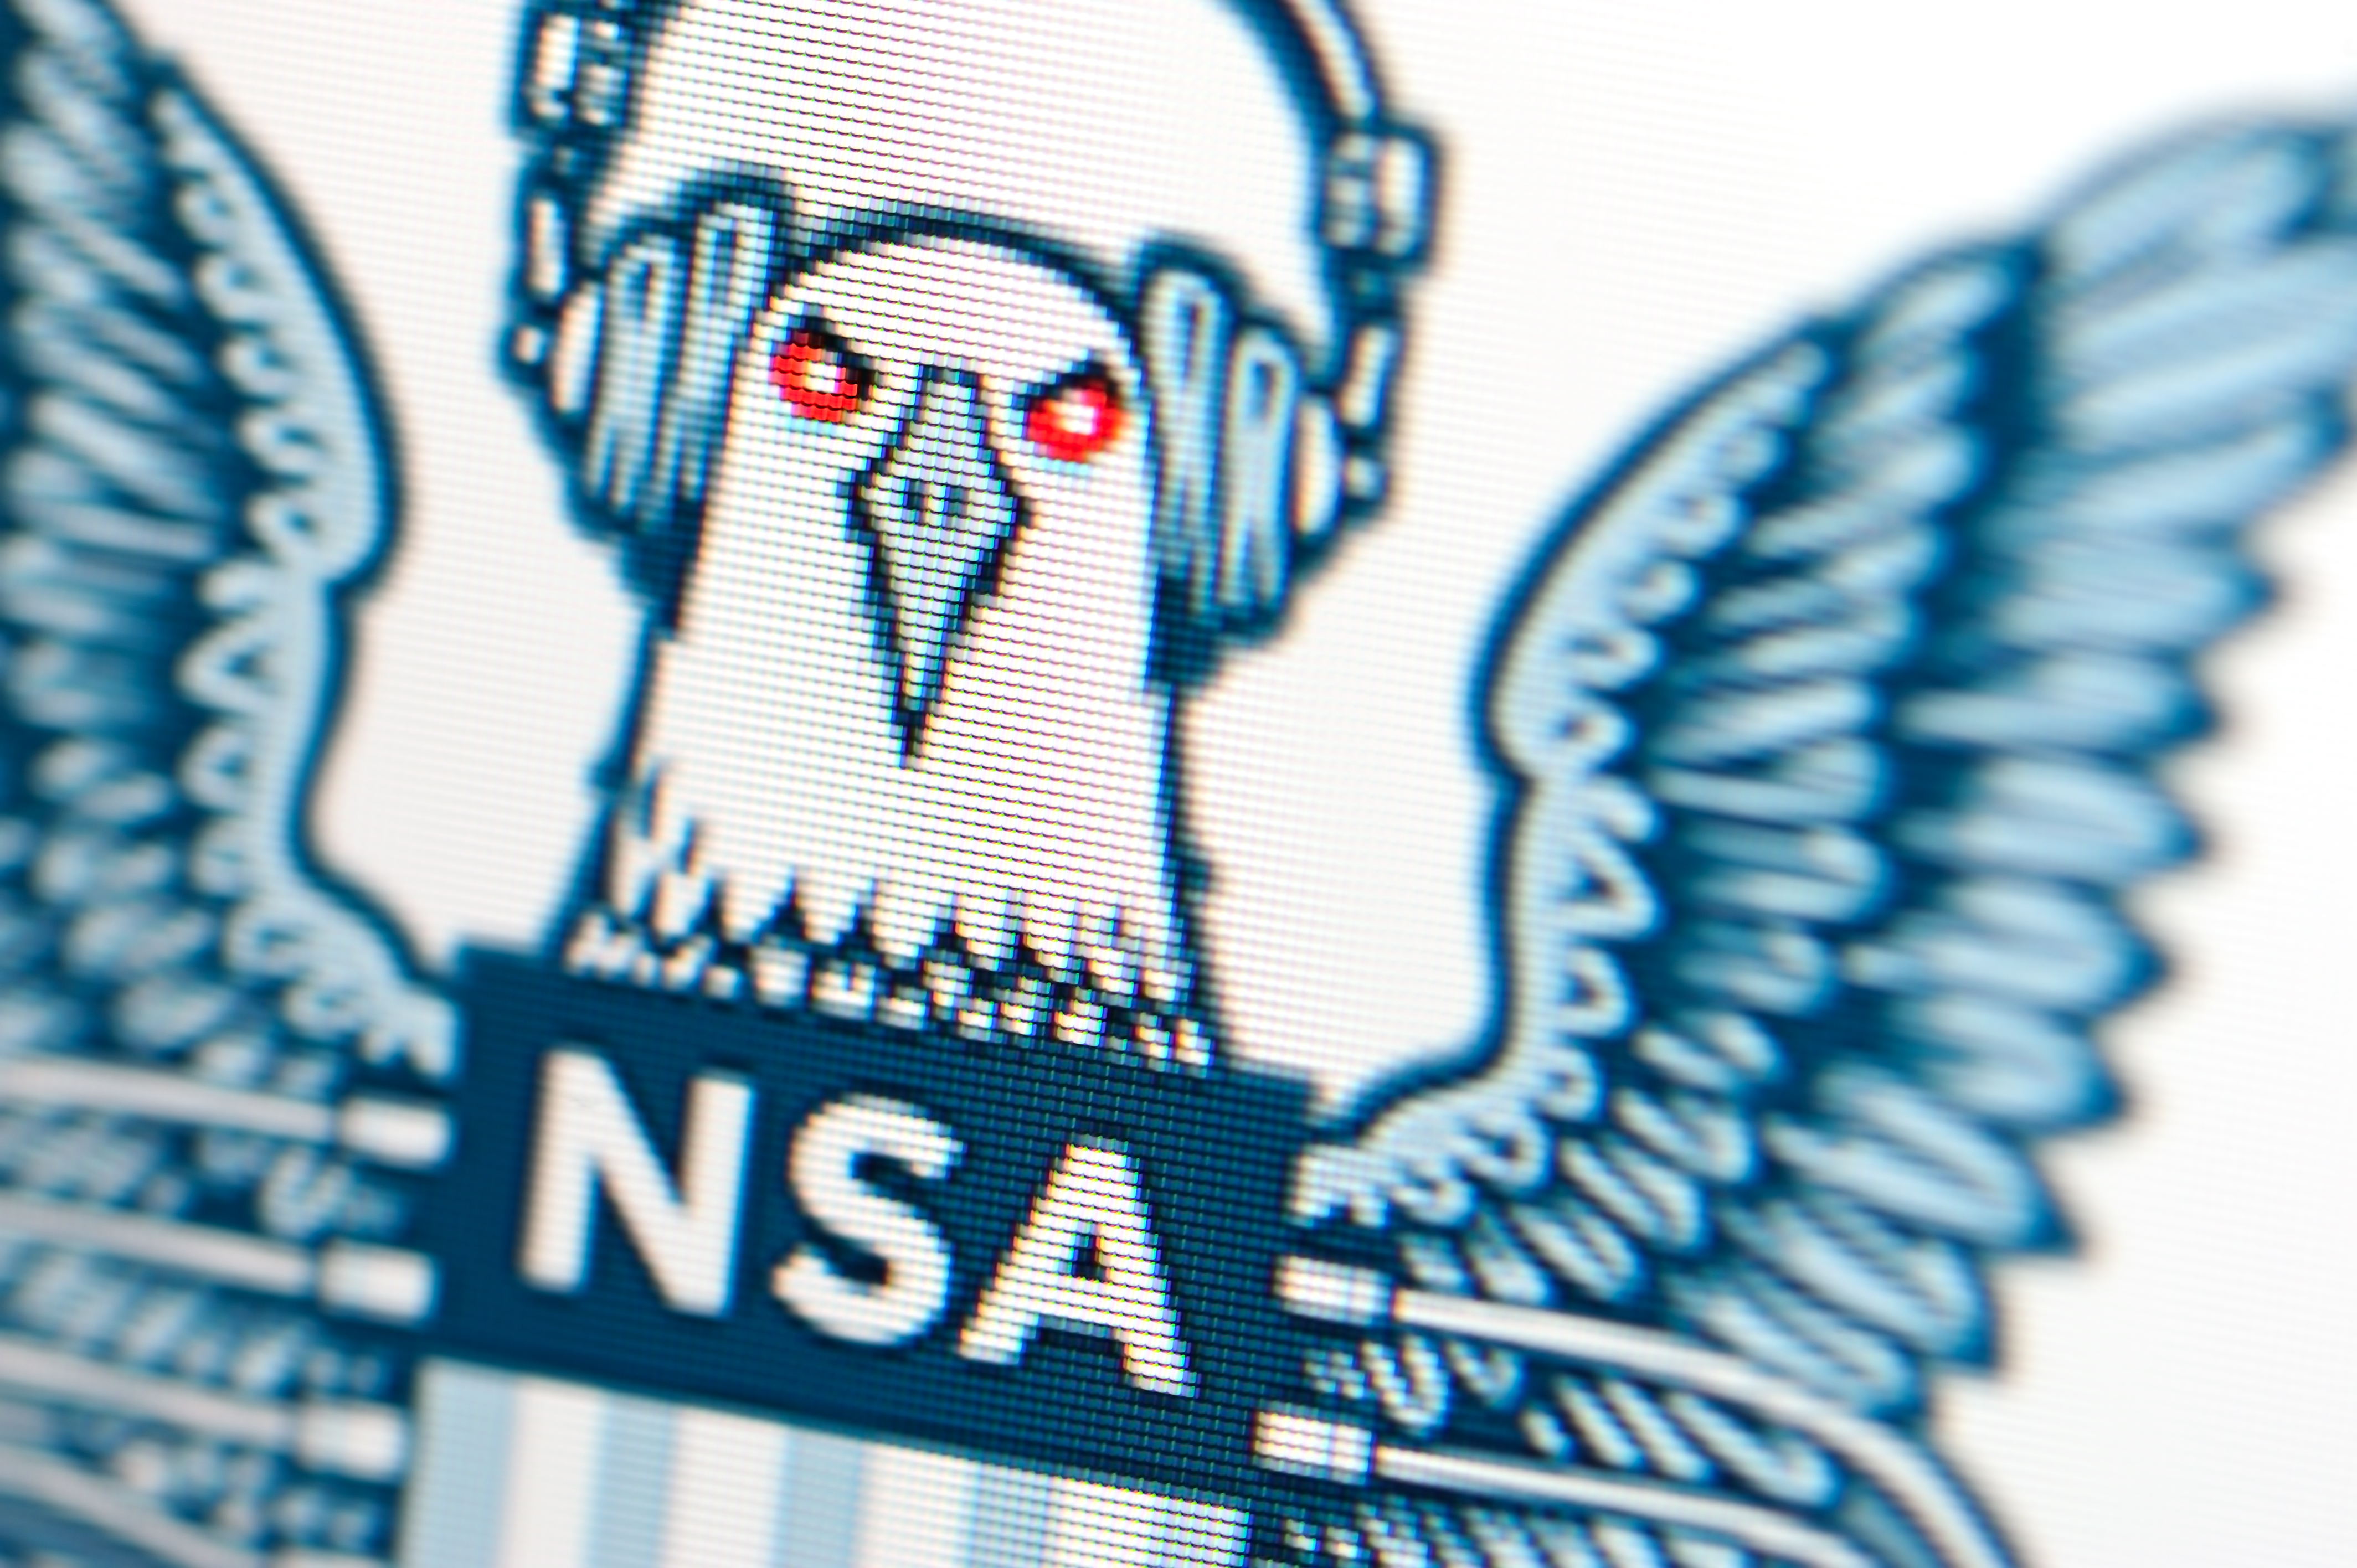 NSA surveillance logo - 17 Jan 2014